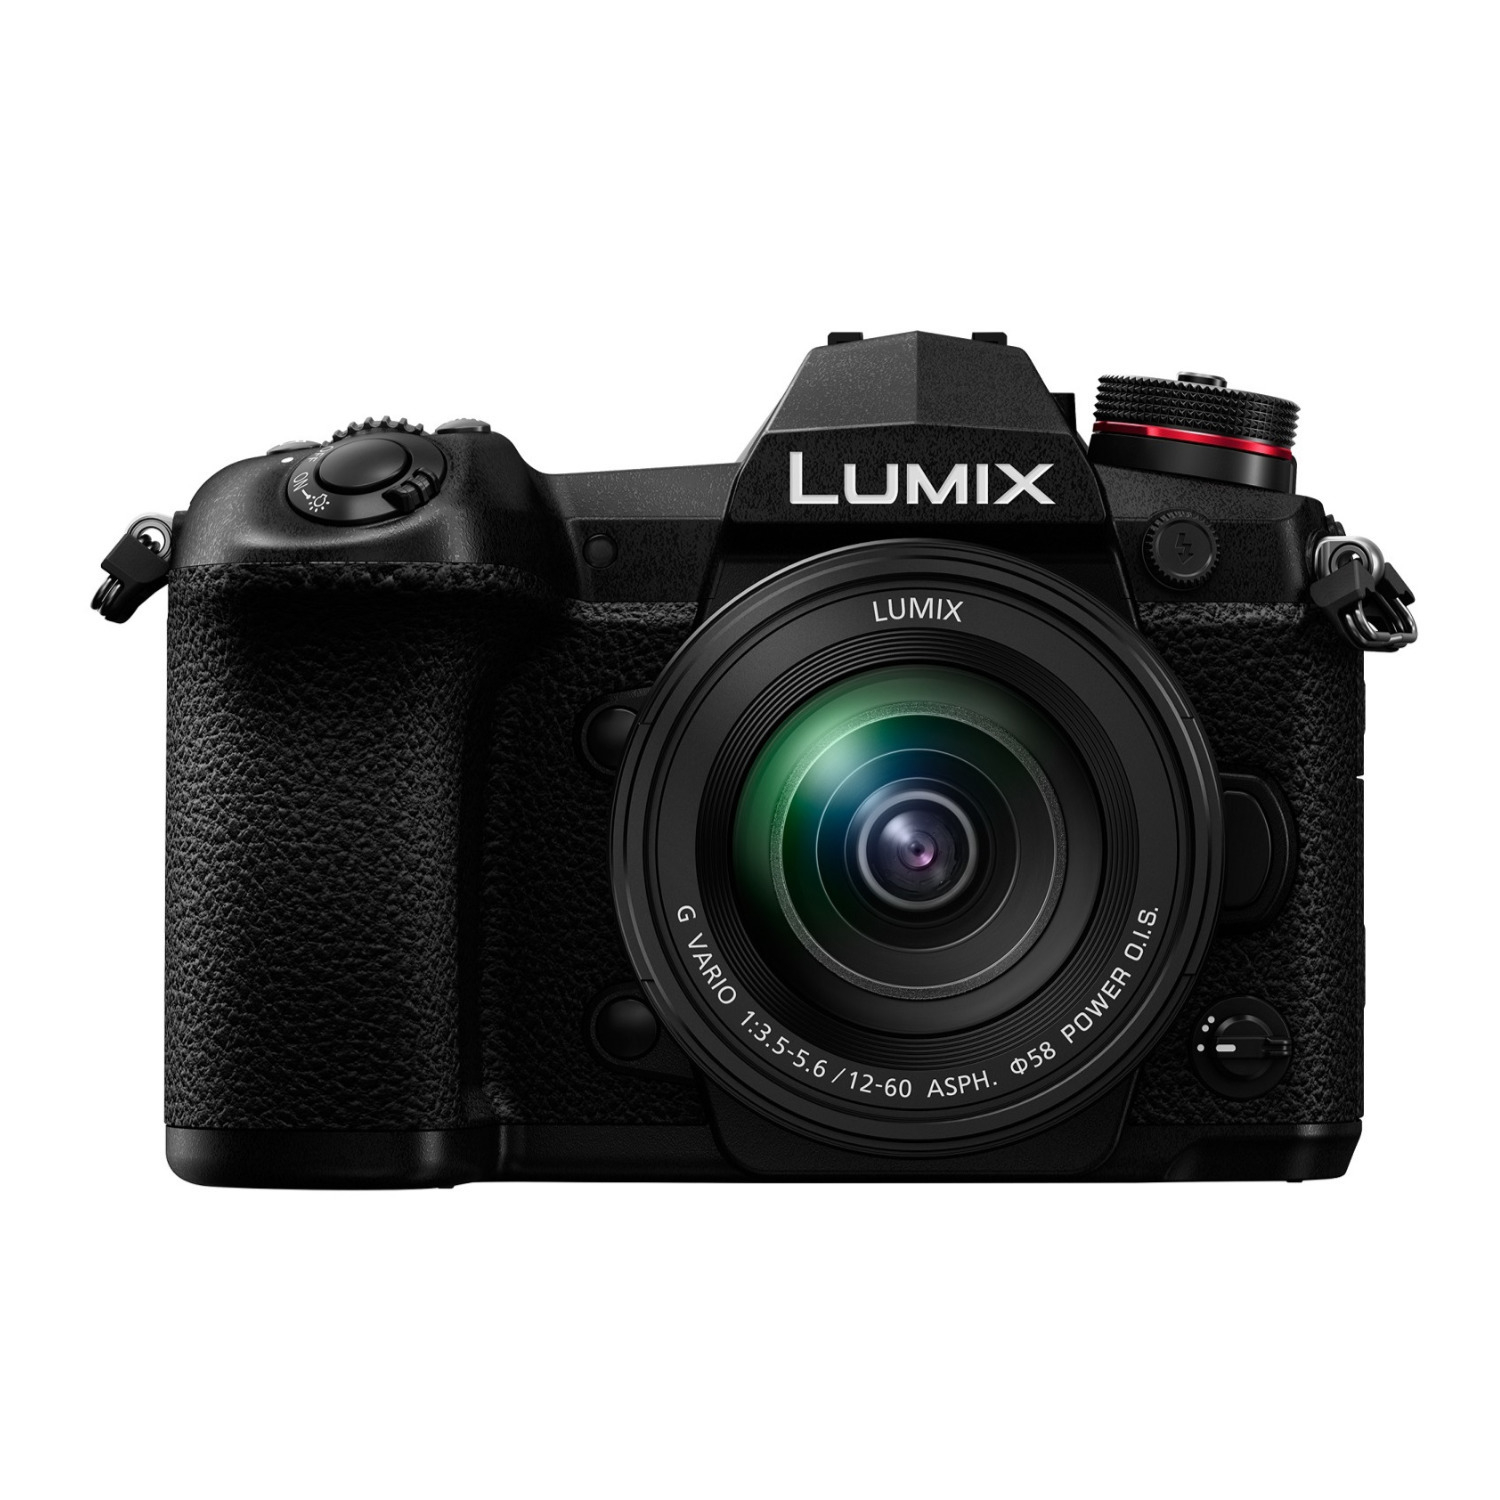 Panasonic LUMIX G9 Mirrorless Camera with LUMIX G Vario 12-60mm f/3.5-5.6 Camera Lens in Black